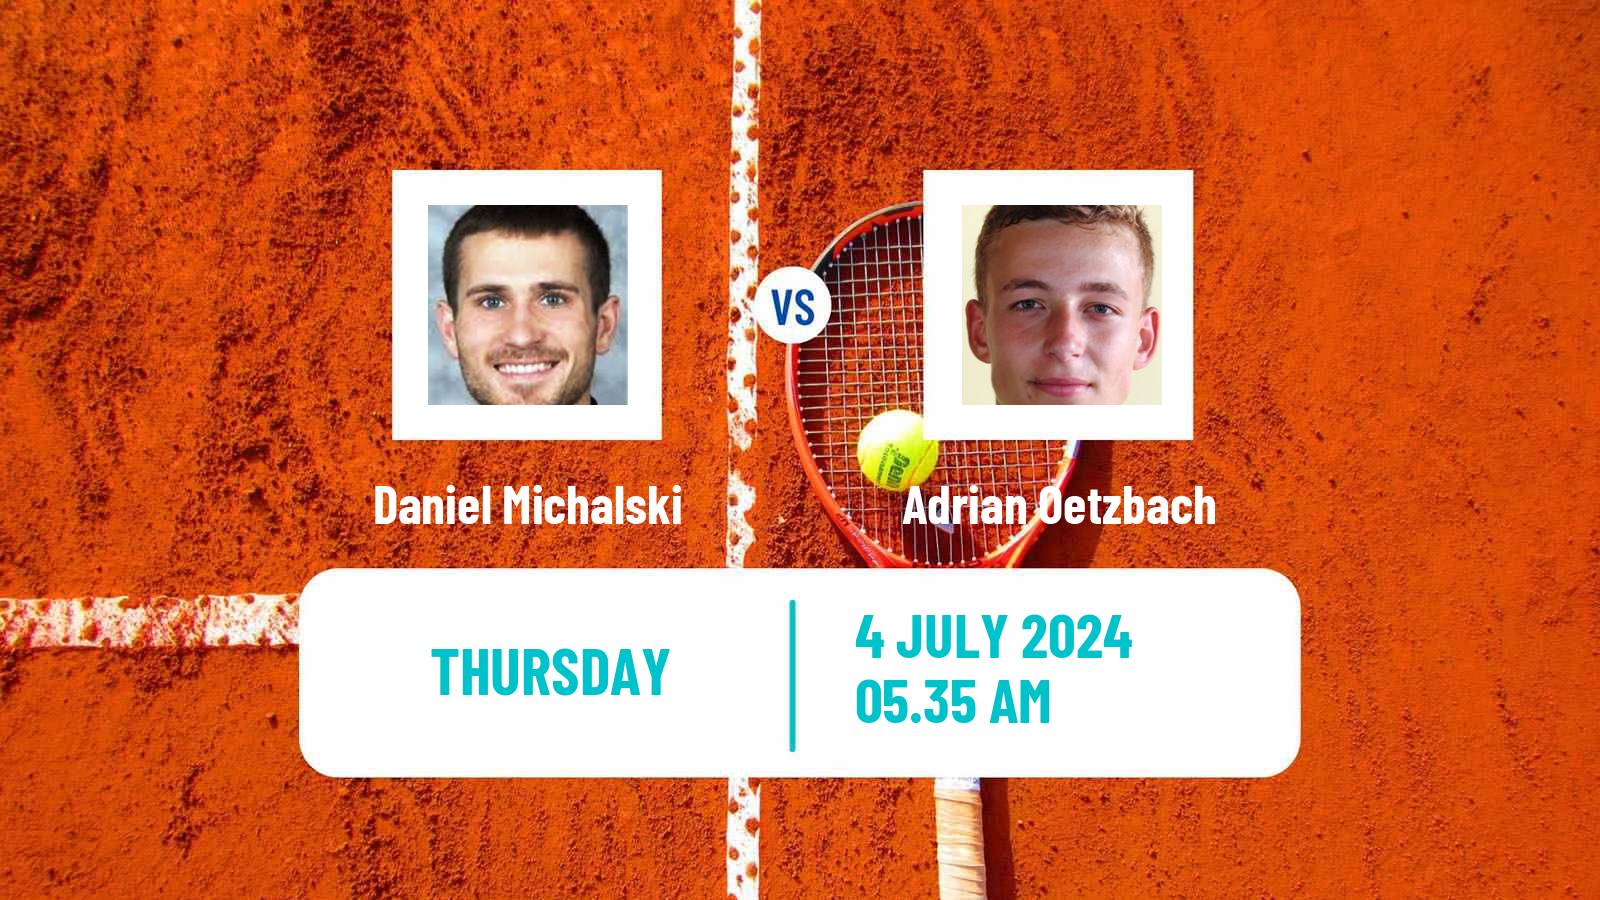 Tennis ITF M25 Marburg Men Daniel Michalski - Adrian Oetzbach